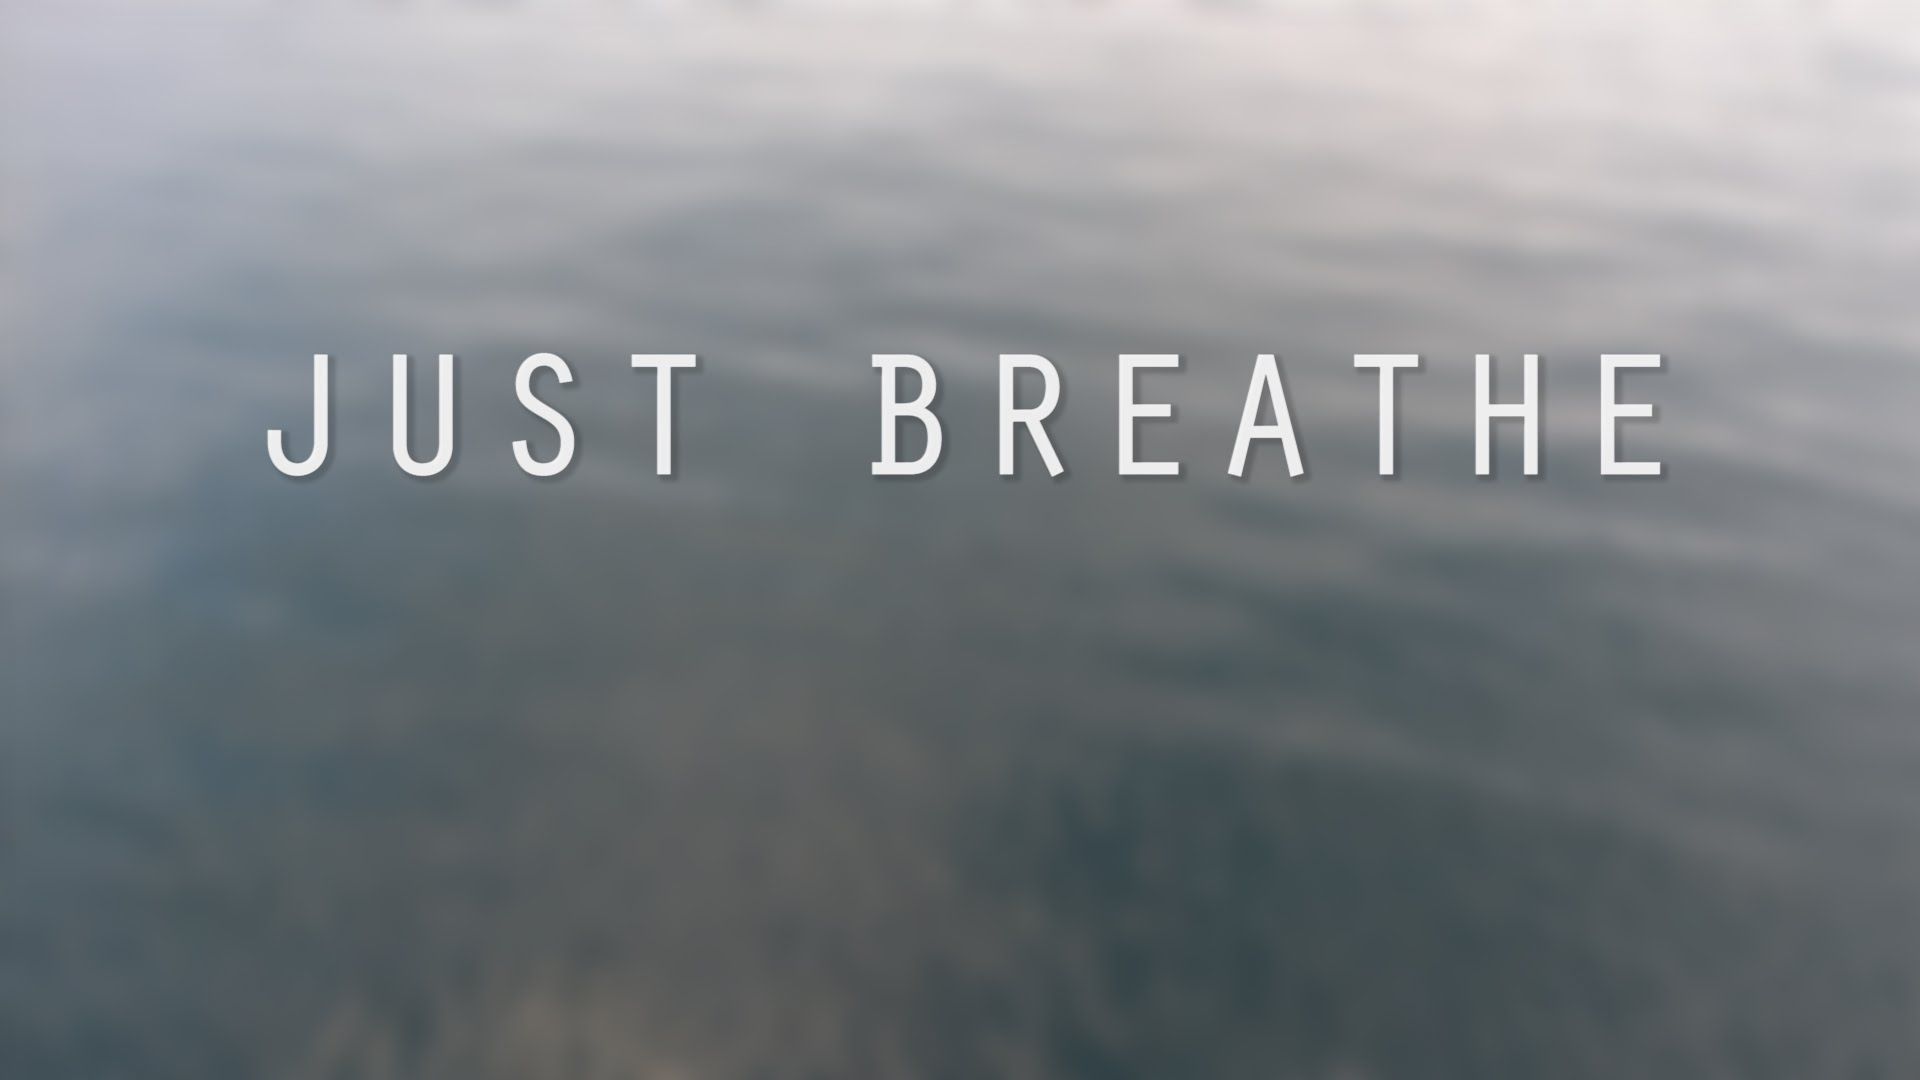 Breathe Wallpaper. Breathe Wallpaper, Breathe Anxiety Wallpaper and Just Breathe Desktop Background